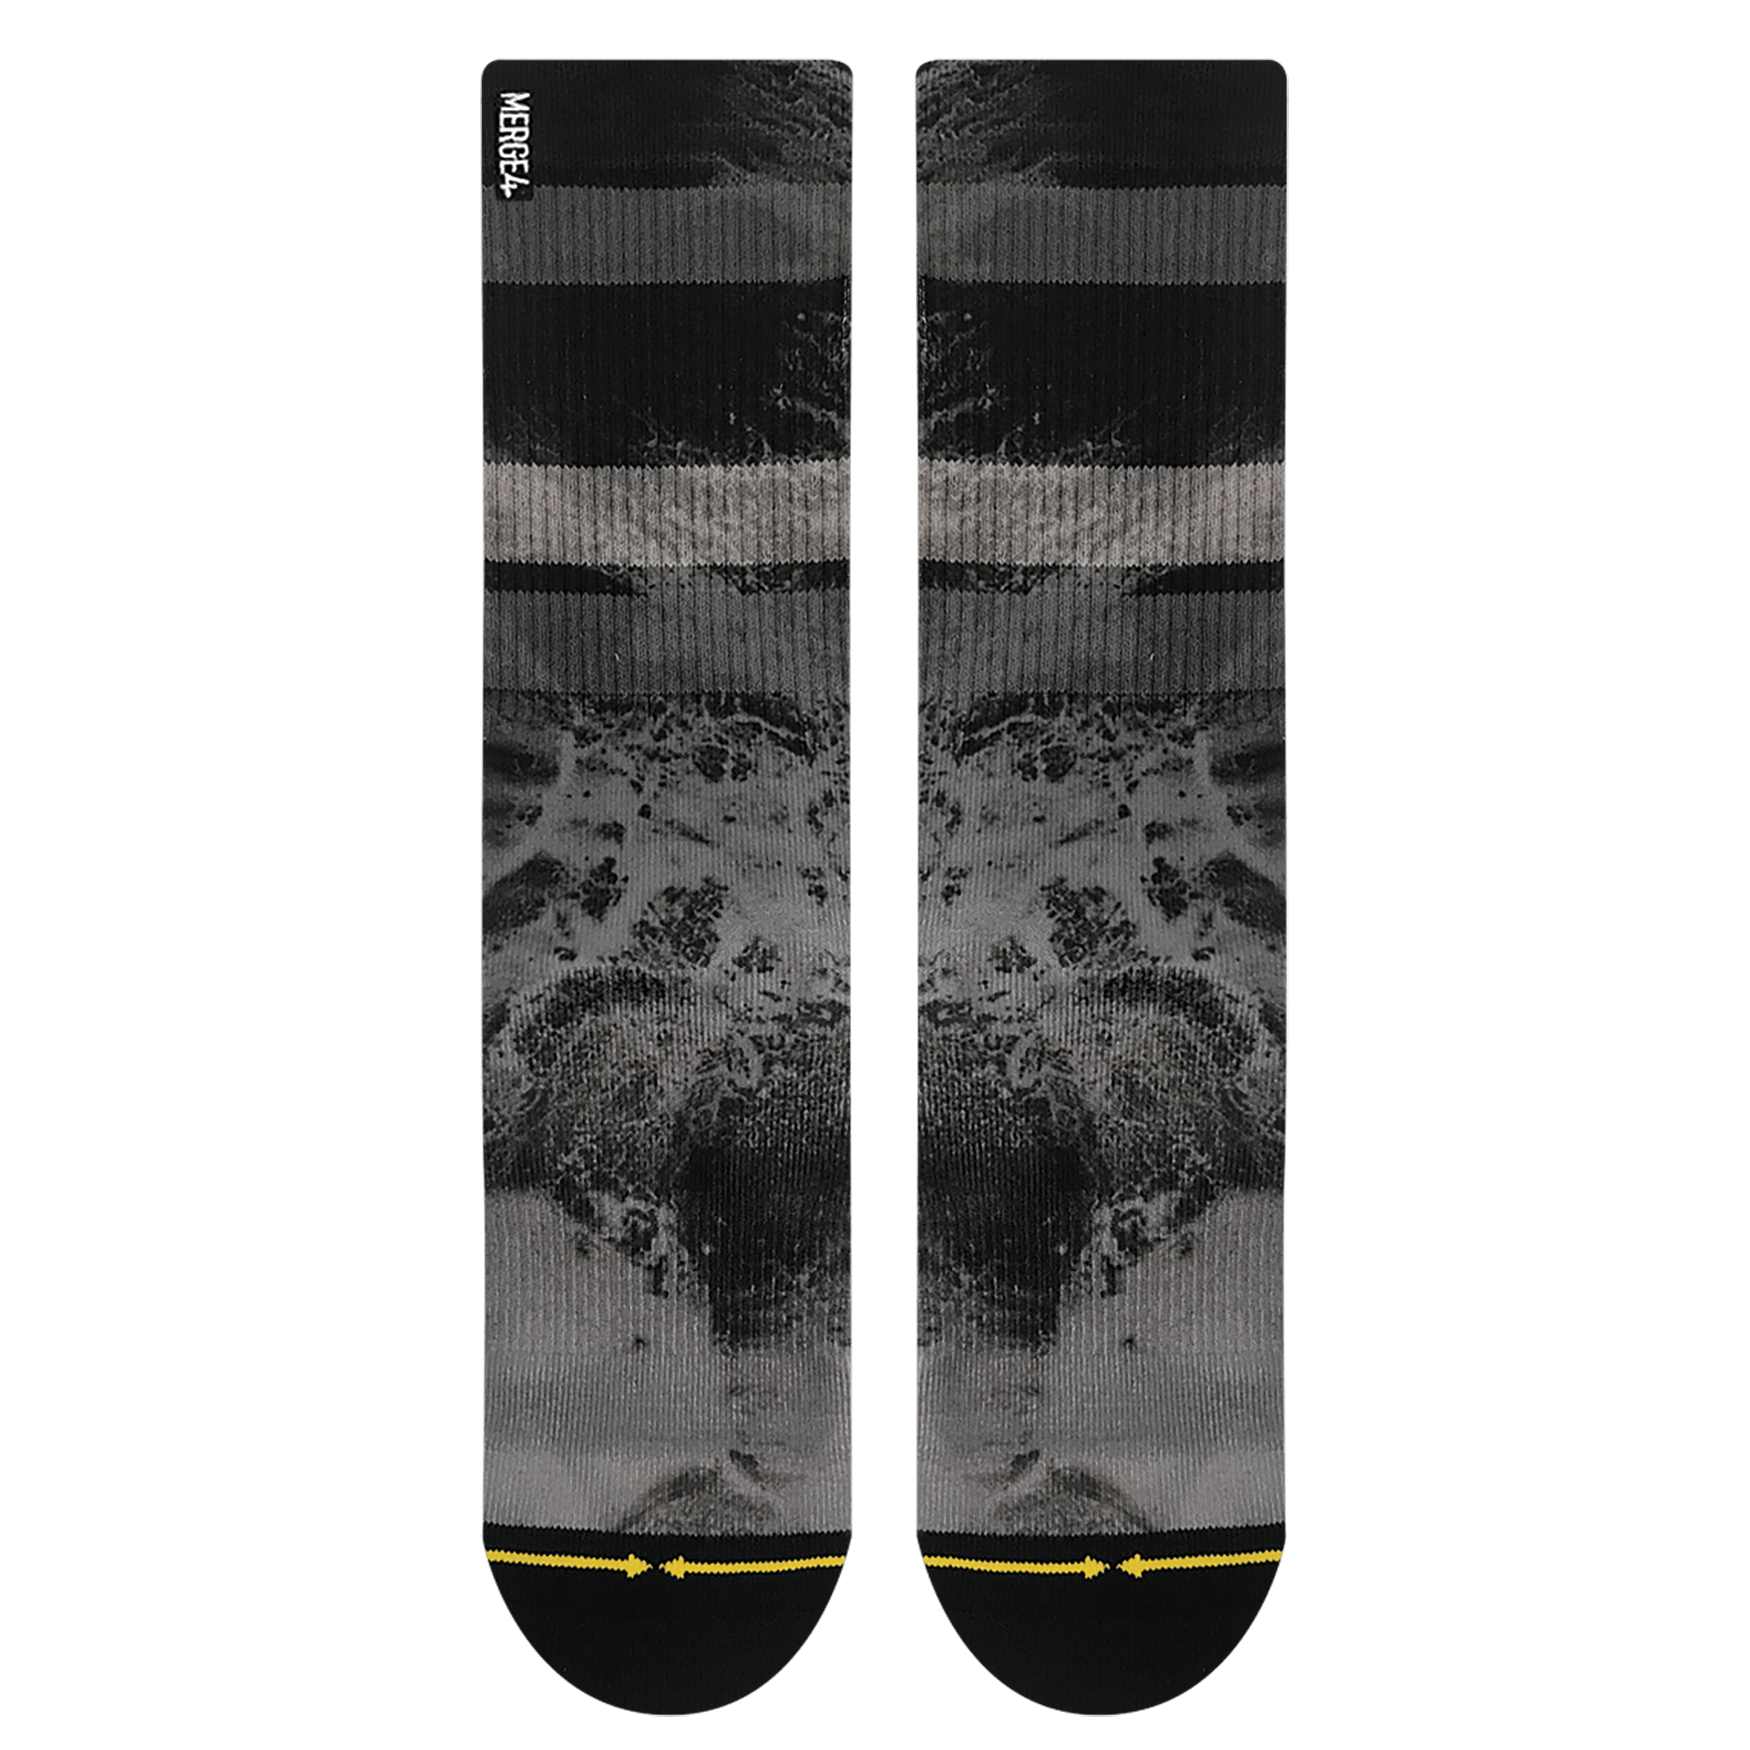 Tentacles Black | Crew Socks for Men and Women | MERGE4